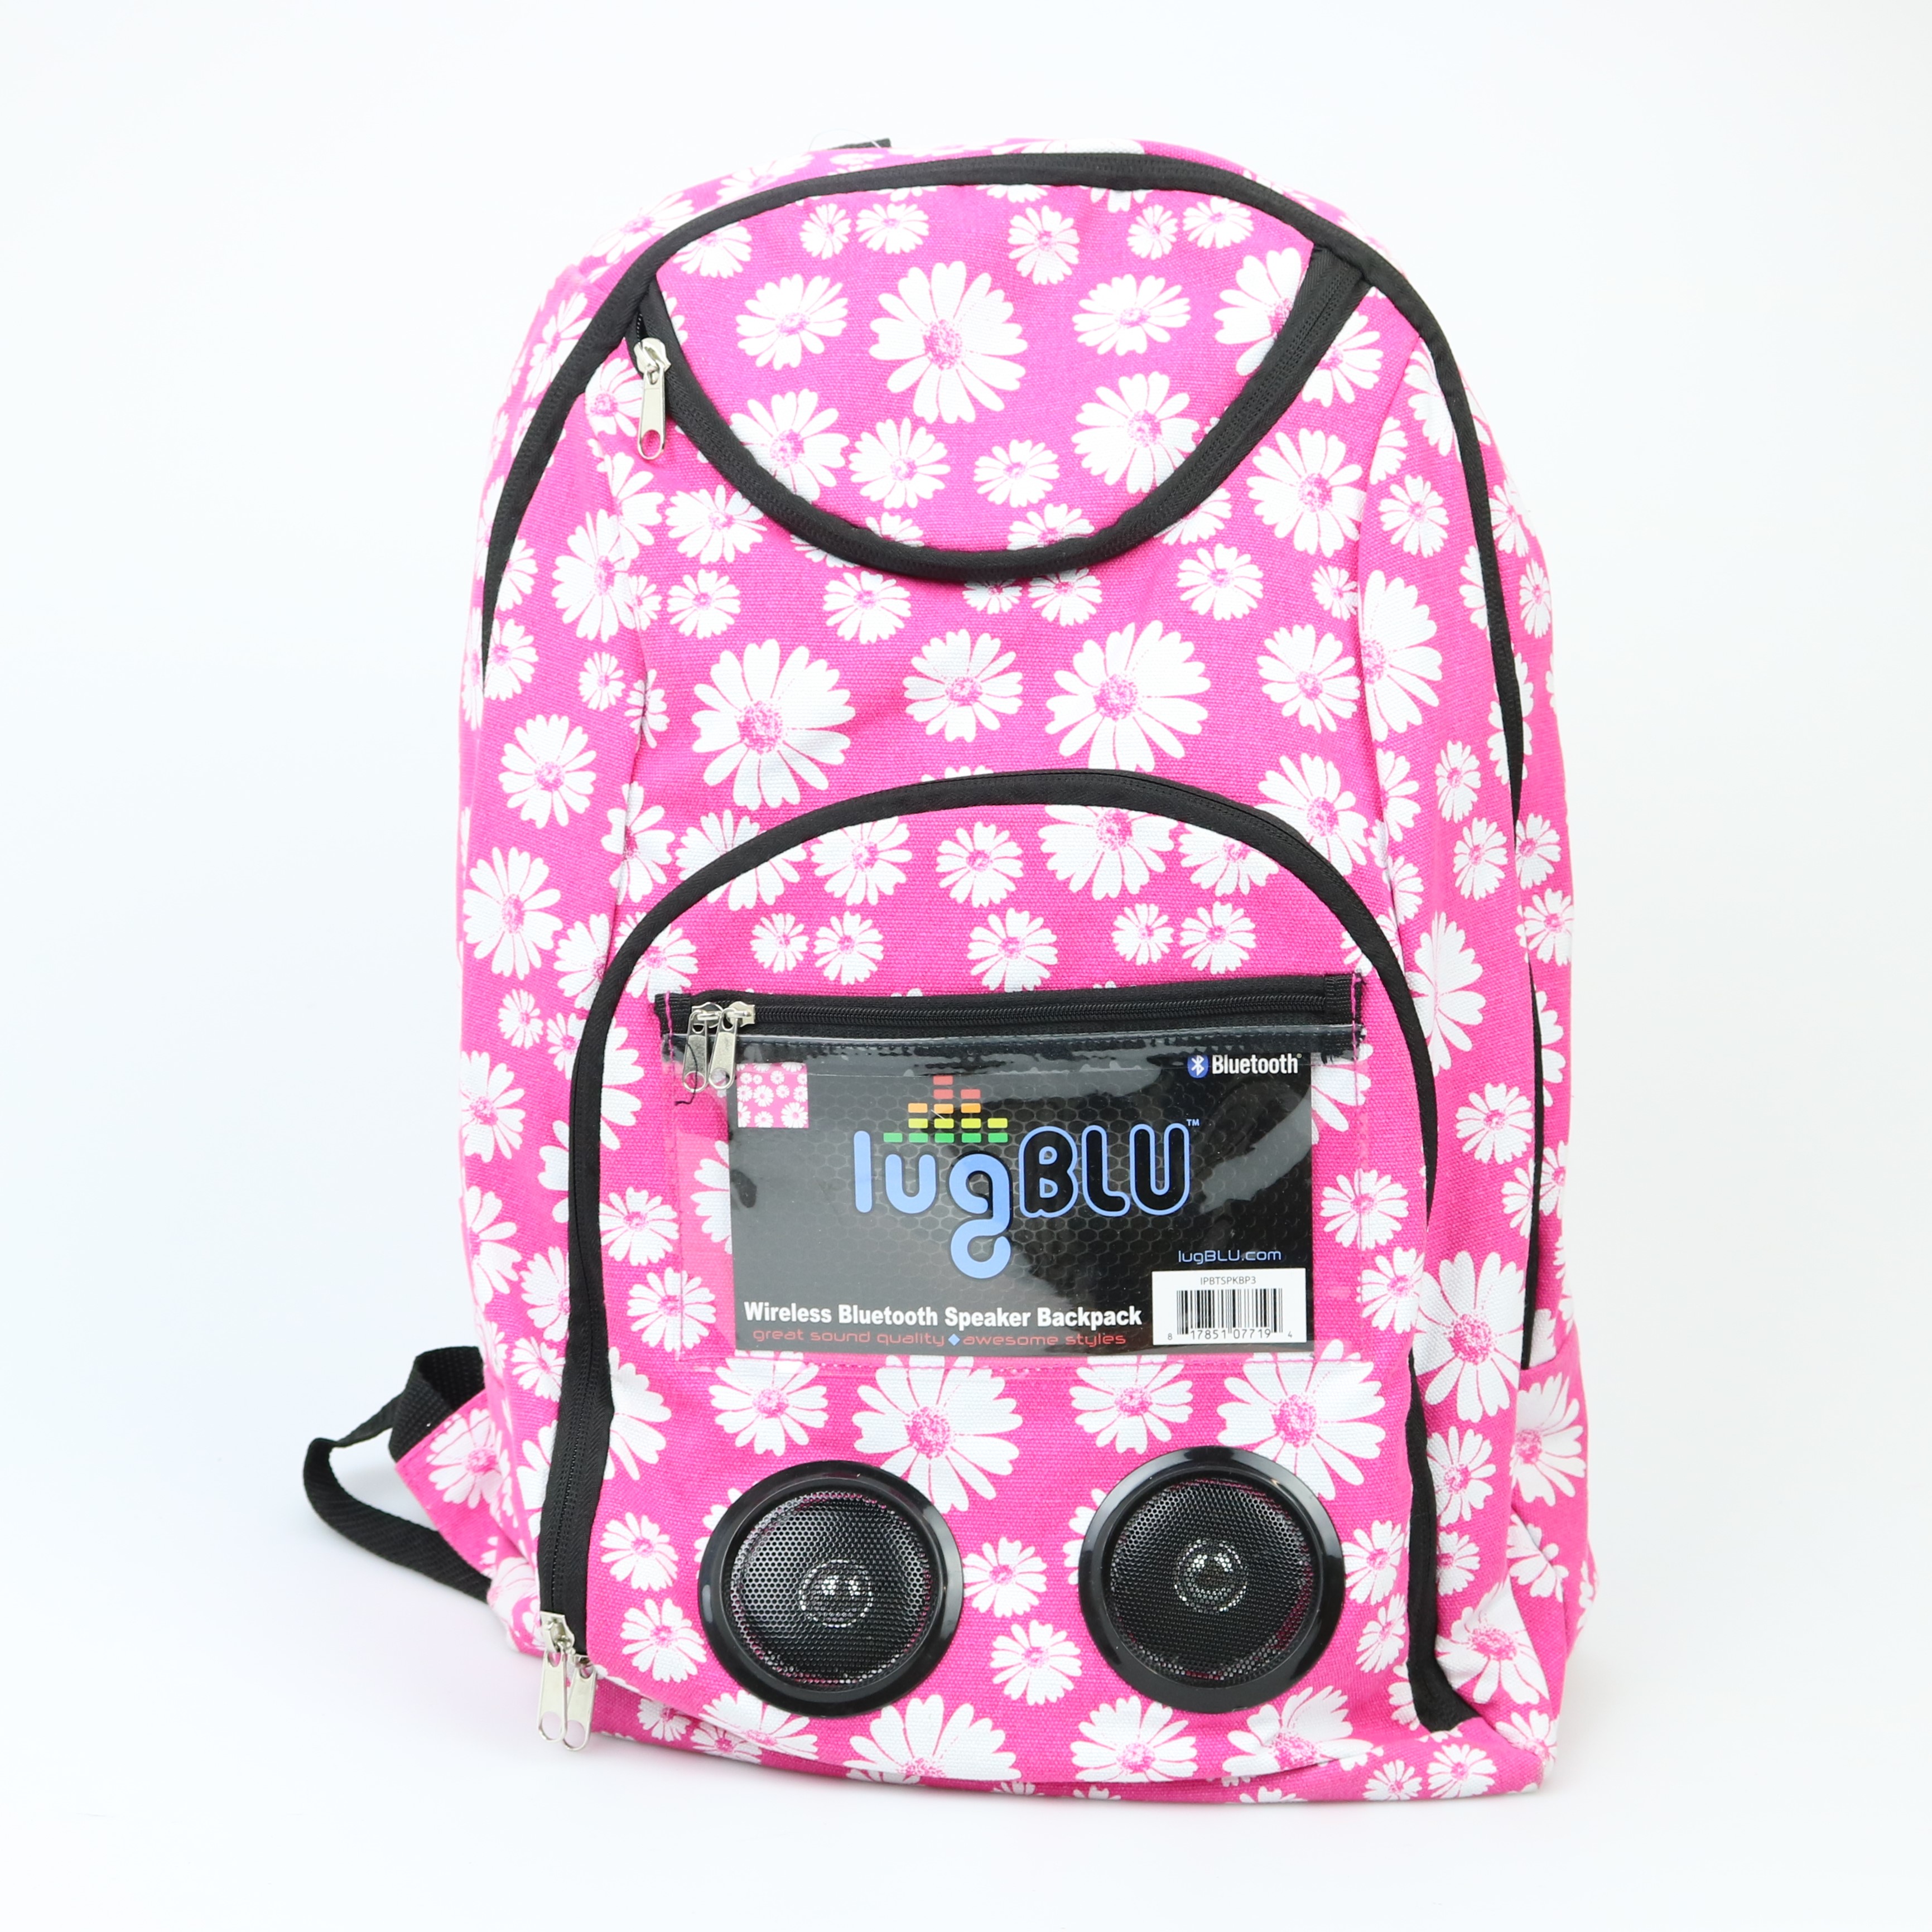 lugBLU Wireless Bluetooth Speaker Backpack - image 1 of 7